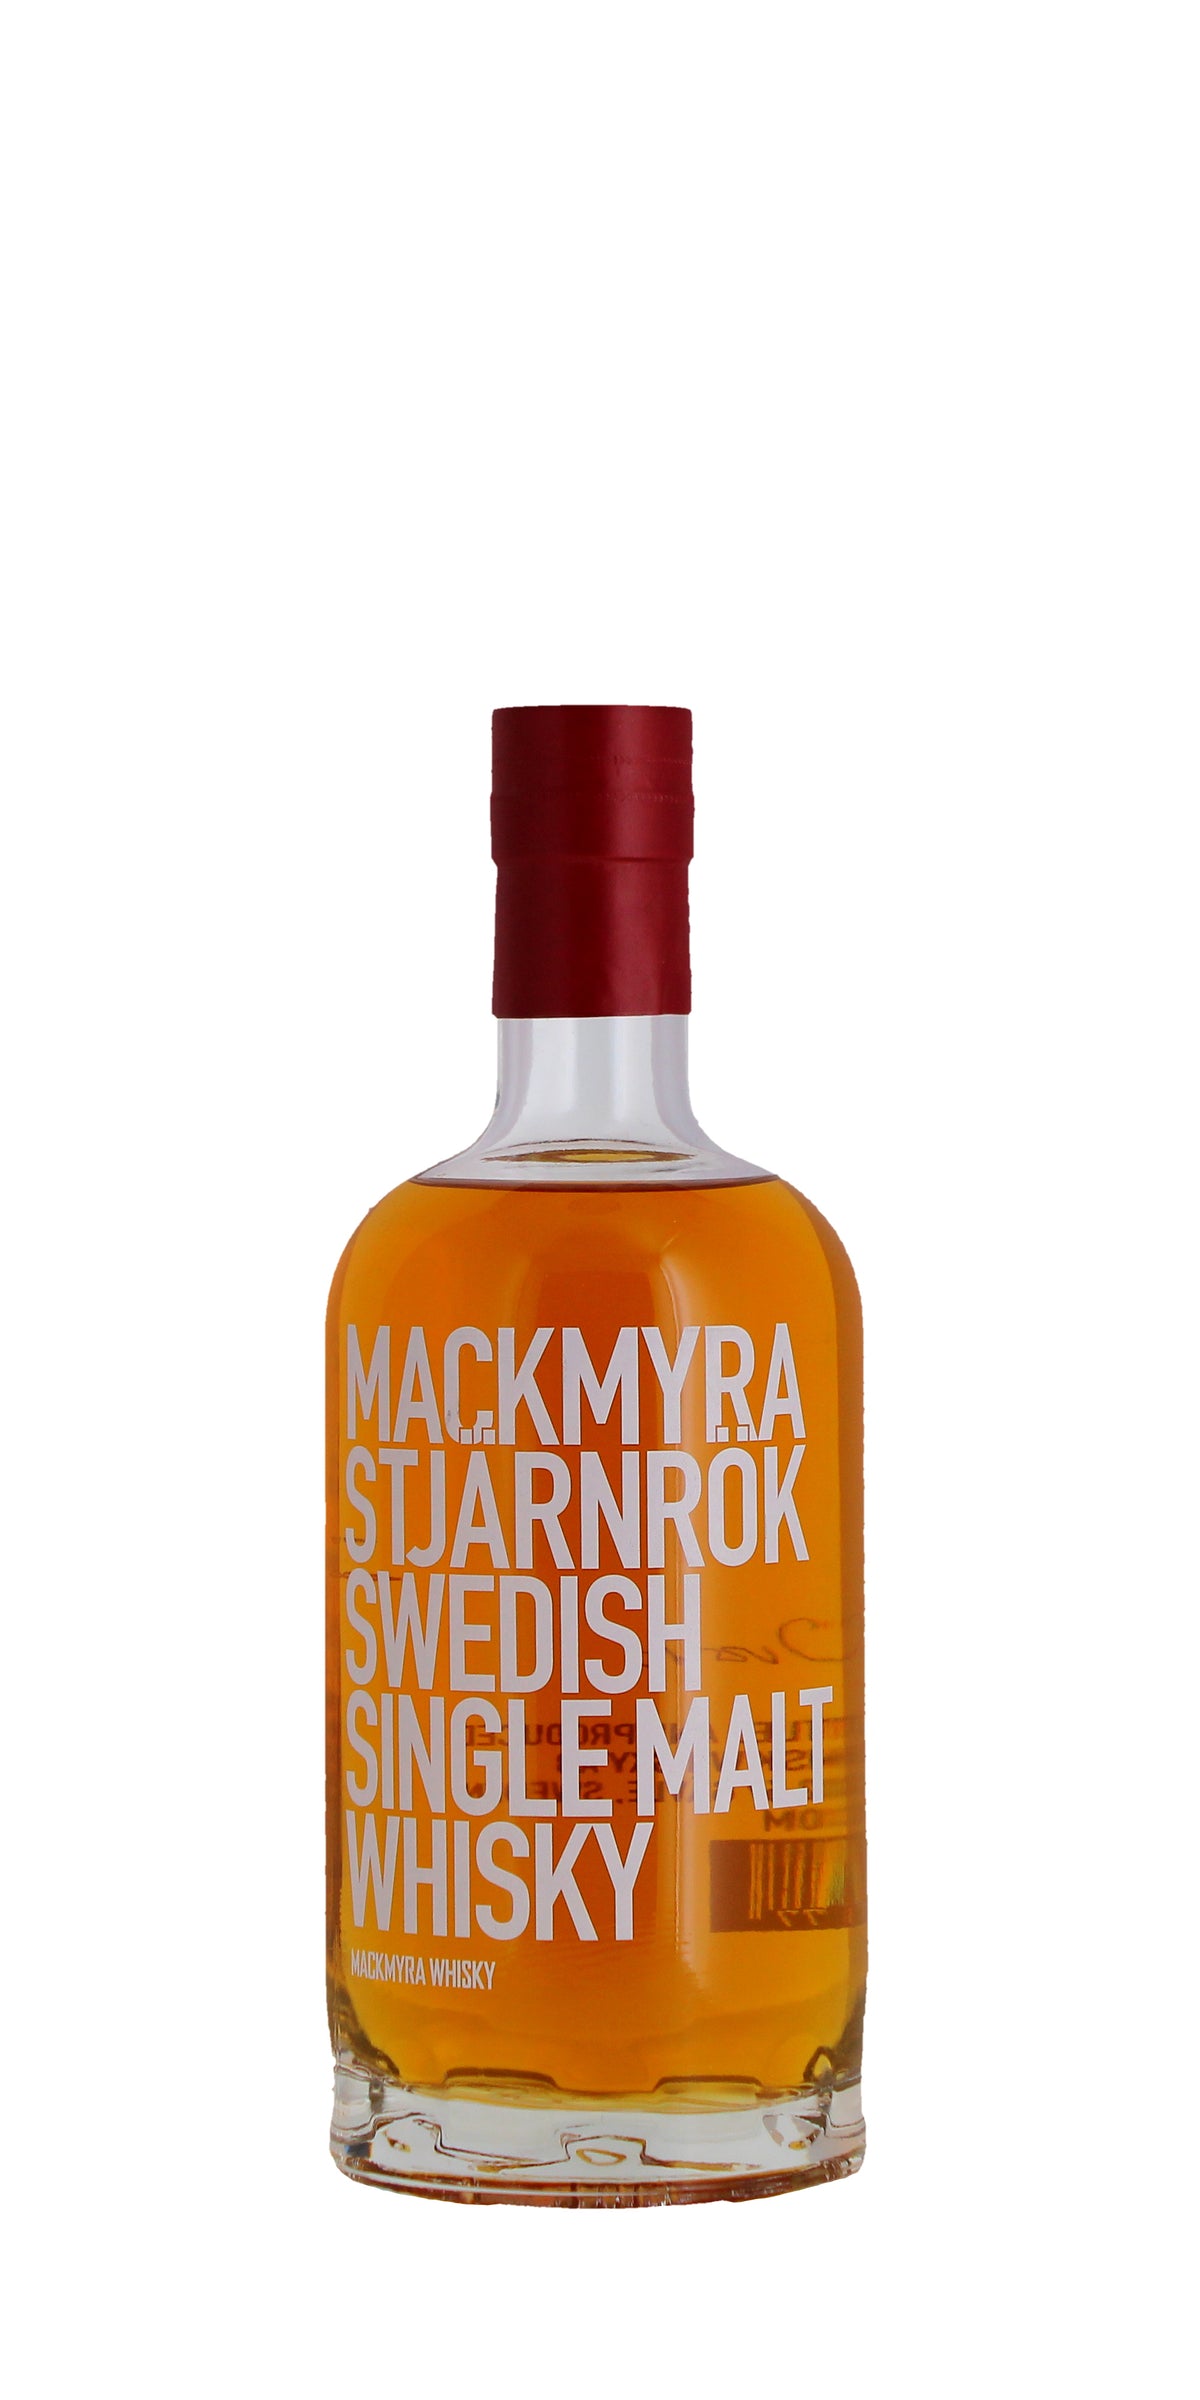 Mackmyra, Stjarnrok, Swedish Single Malt Whisky, 70cl